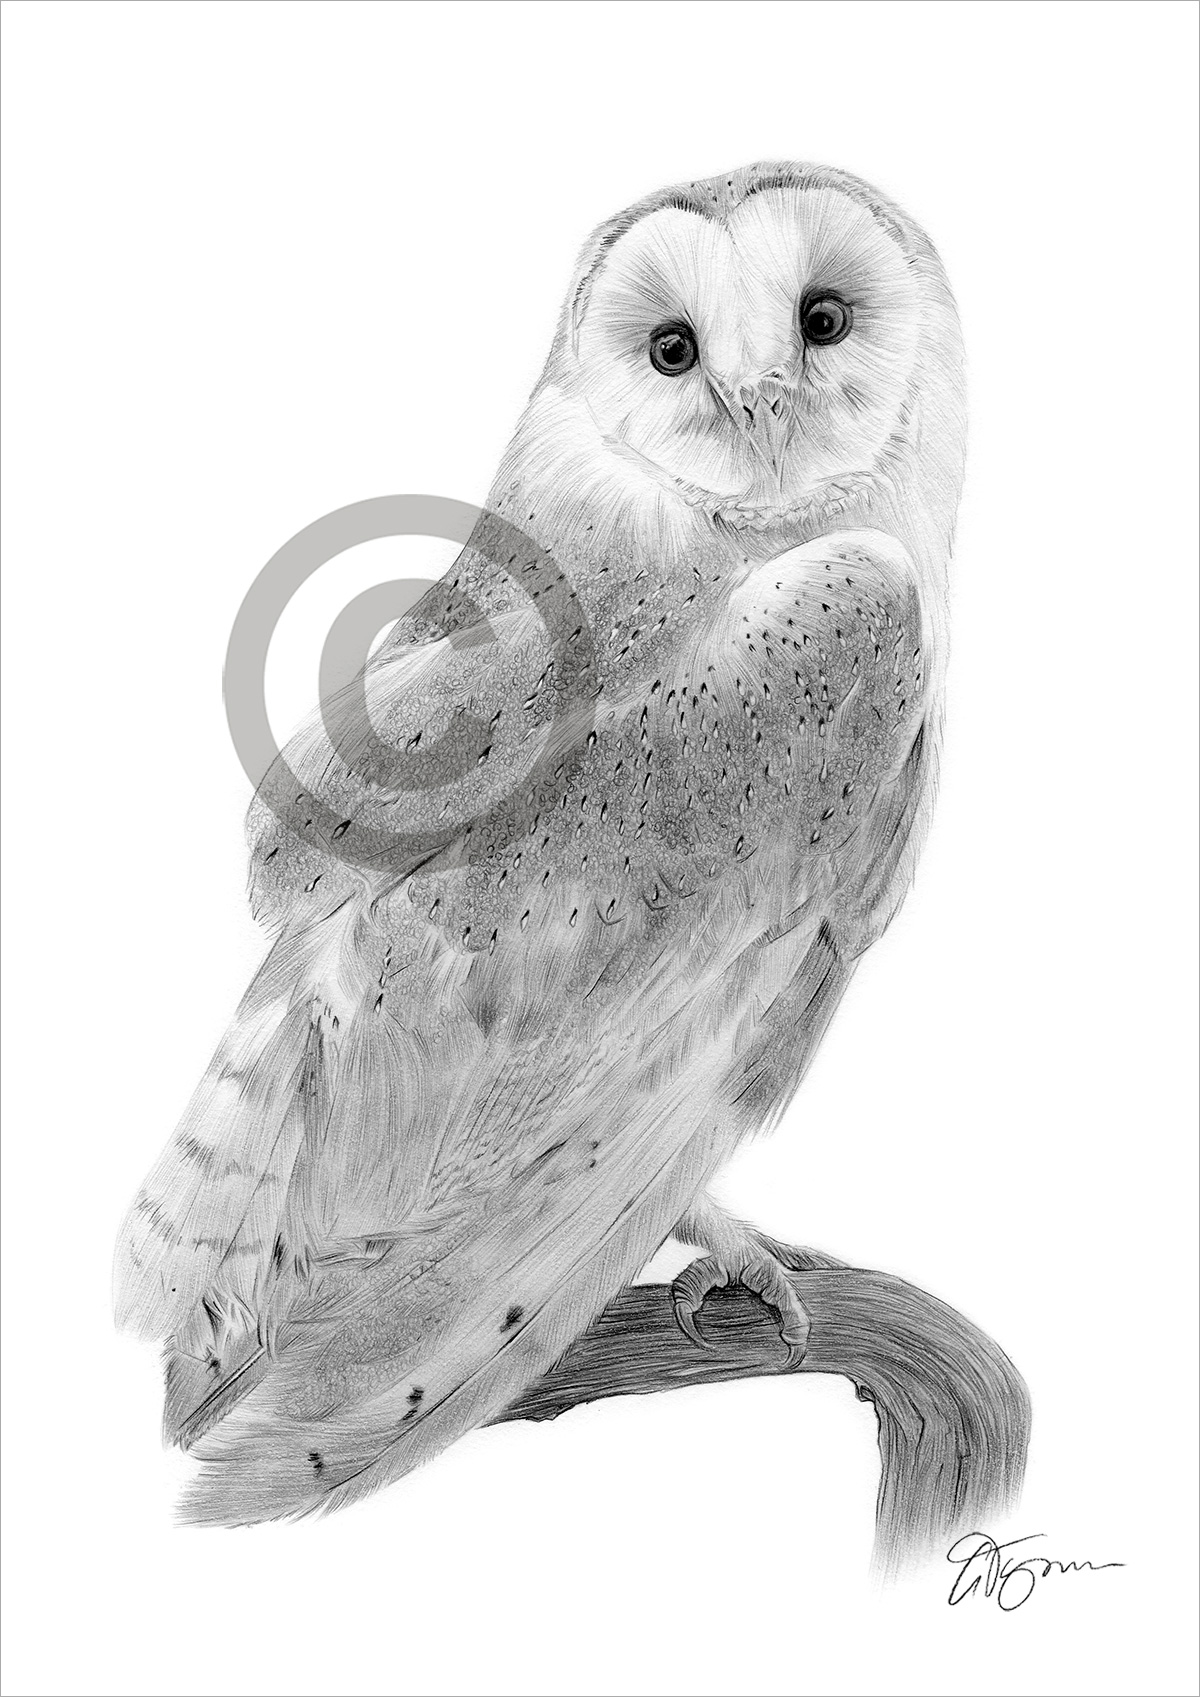 Pencil drawing of a barn owl by artist Gary Tymon